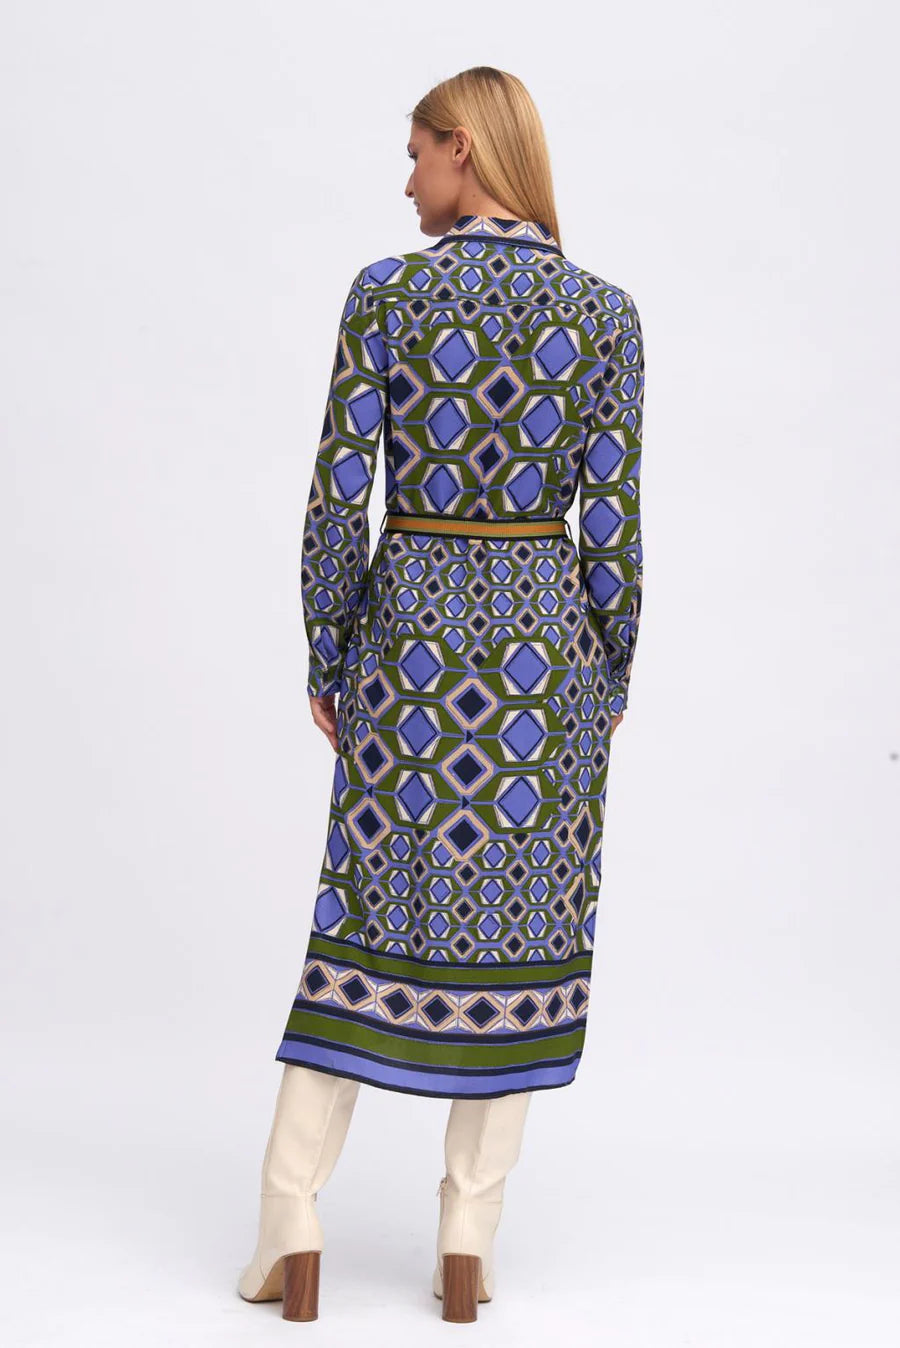 Tinta Style Portillo Belted Dress in Violeta